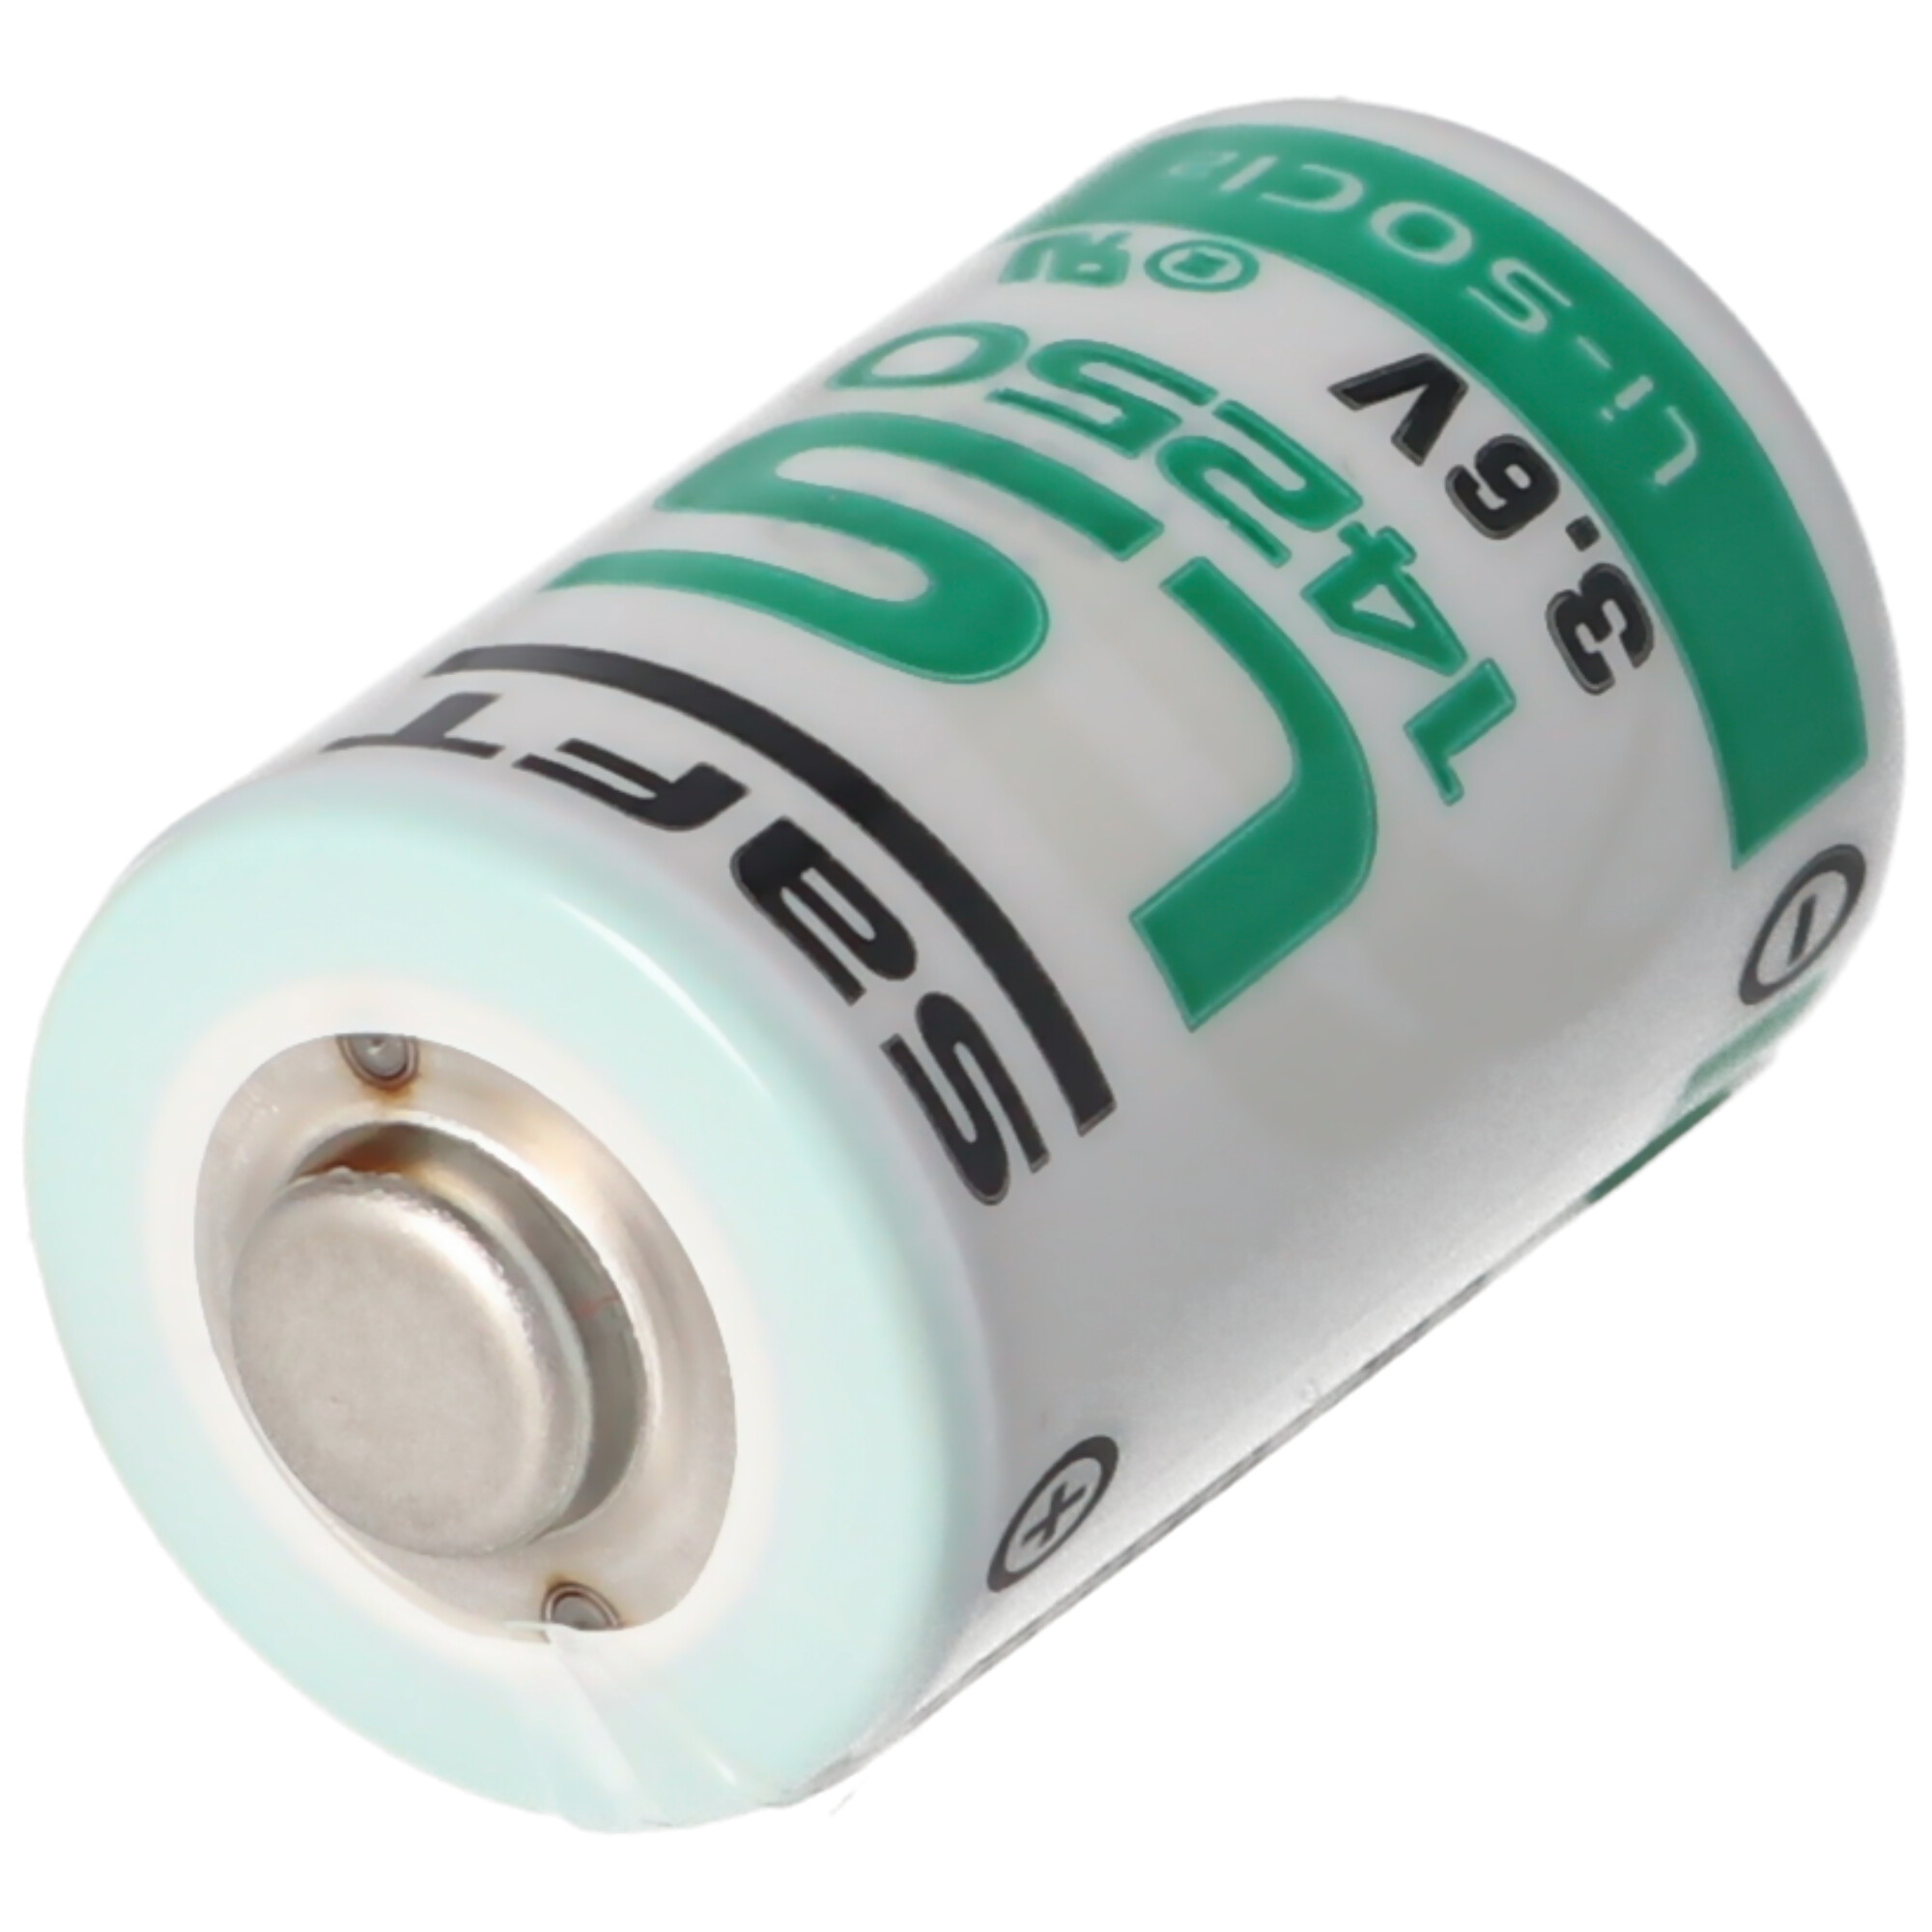 SAFT LS14250 Lithium Batterie Li-SOCI2, Size 1/2 AA LST14250